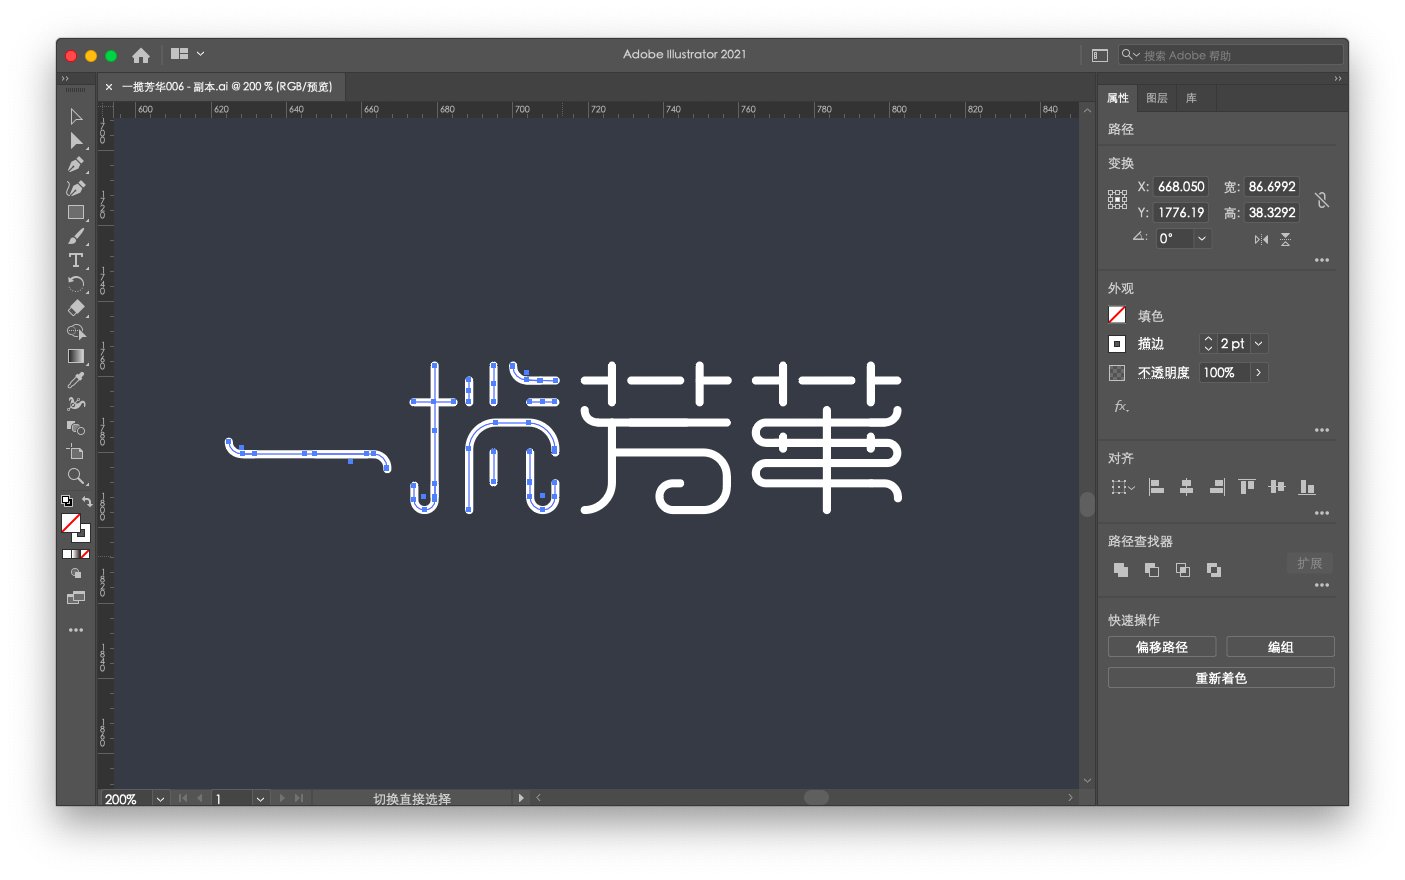 Adobe Illustrator For Mac - 作品 - 一揽芳华